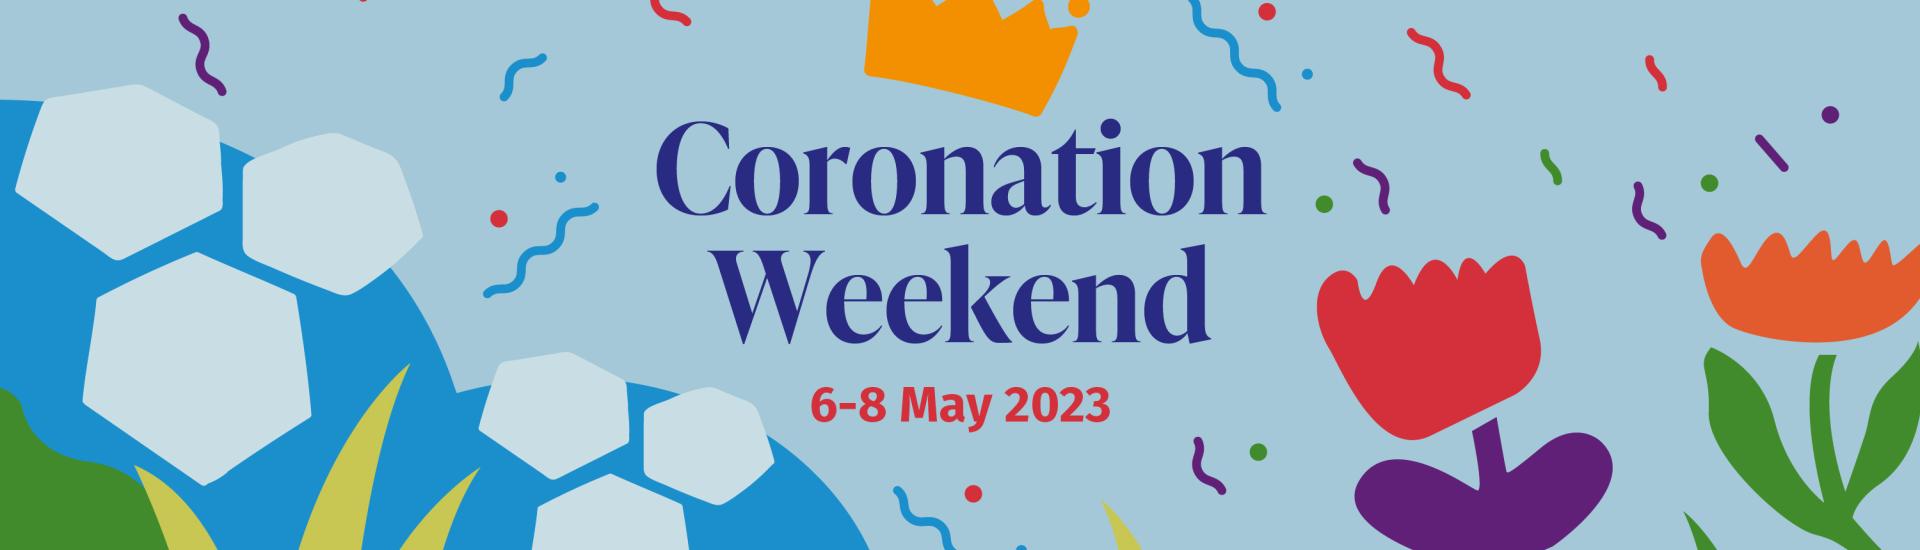 Coronation Weekend 6-8 May 2023 creative